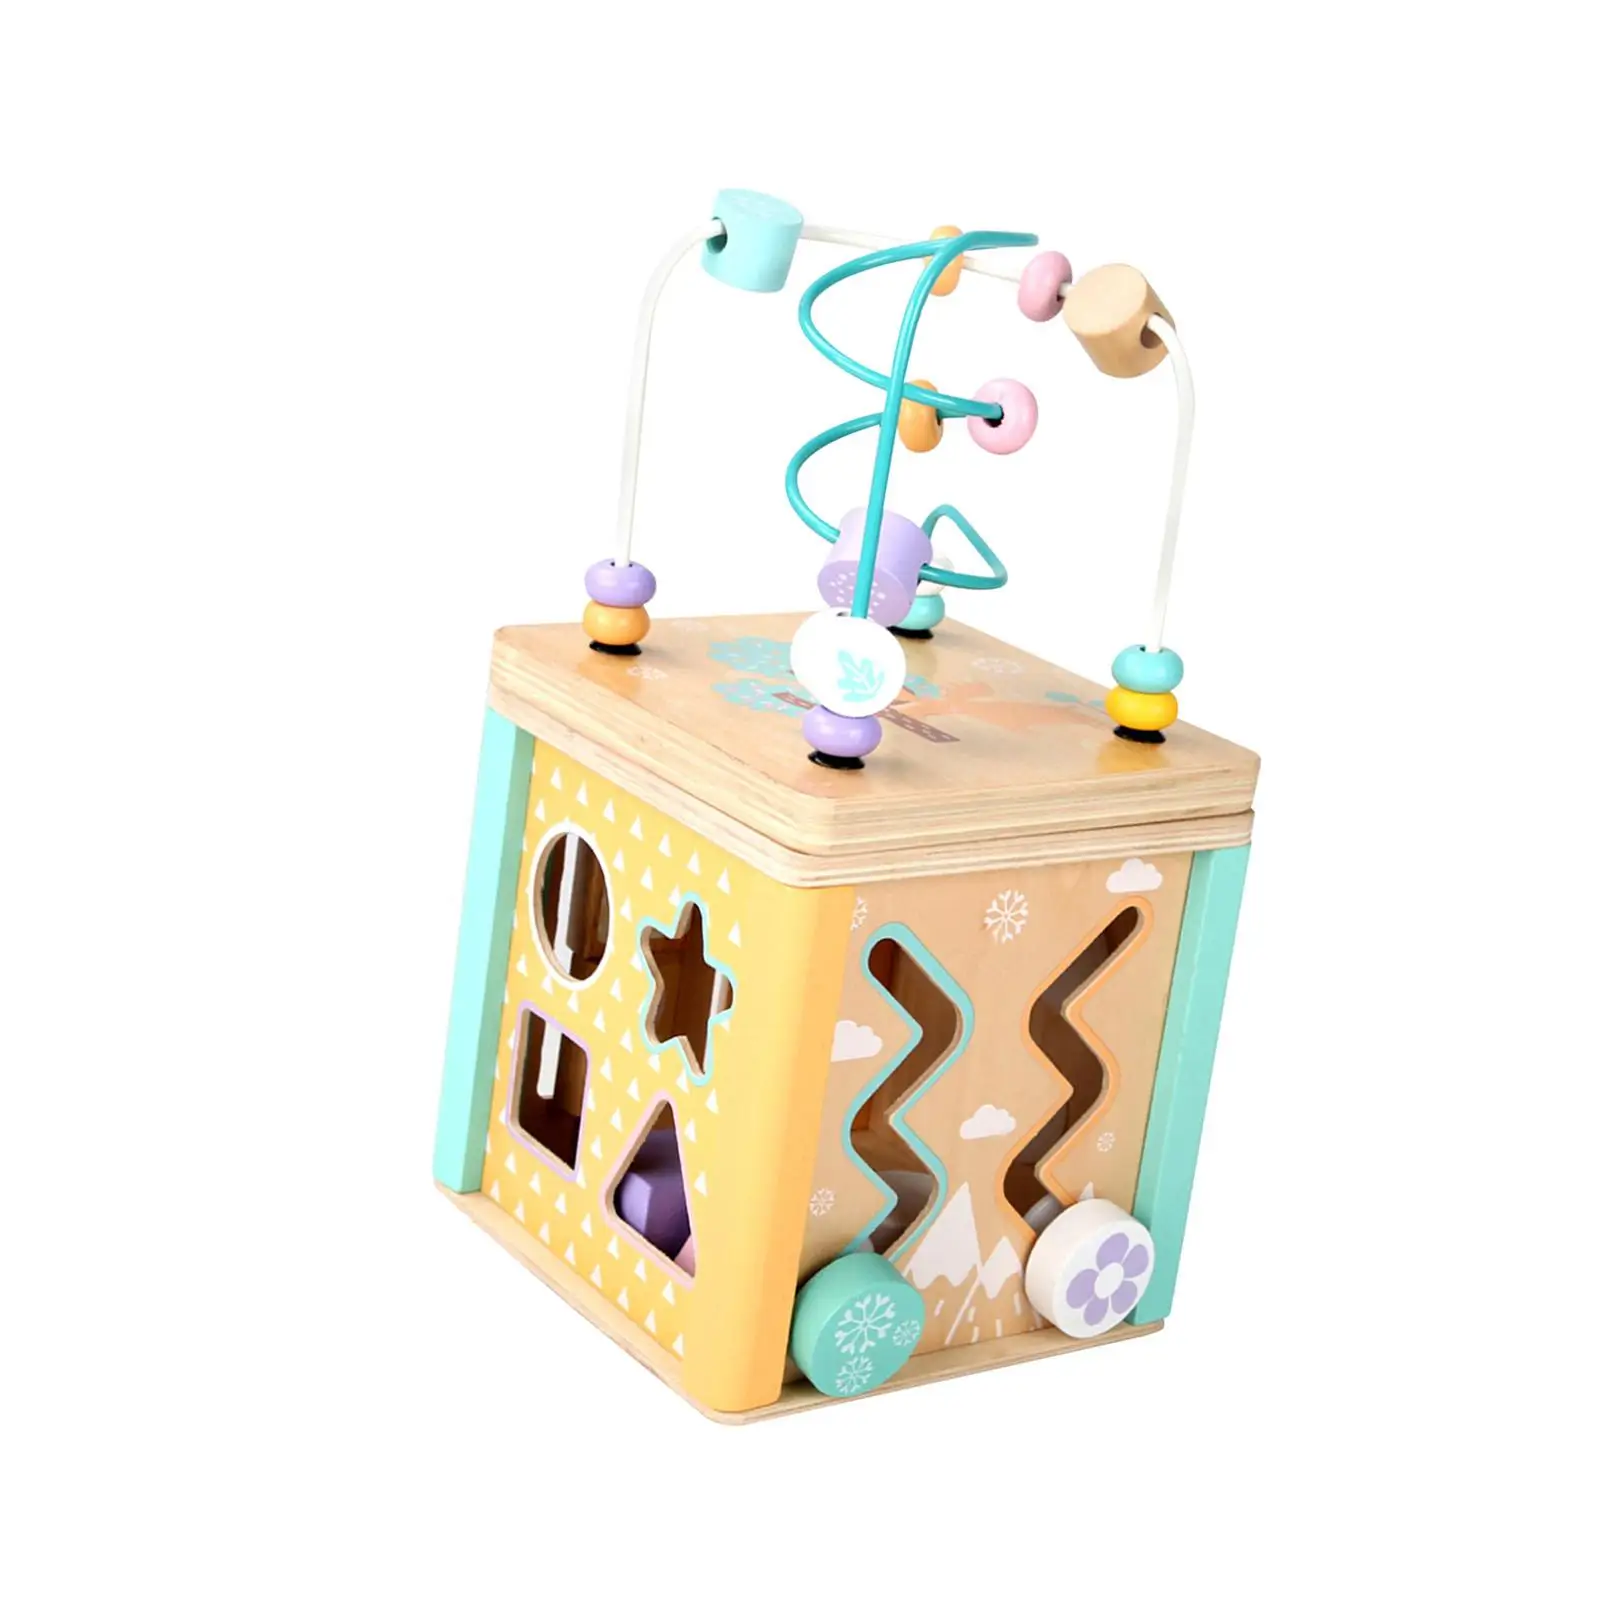 Classic Bead Maze with Bead Maze Matching Logical Game Bead Maze for Preschool Children